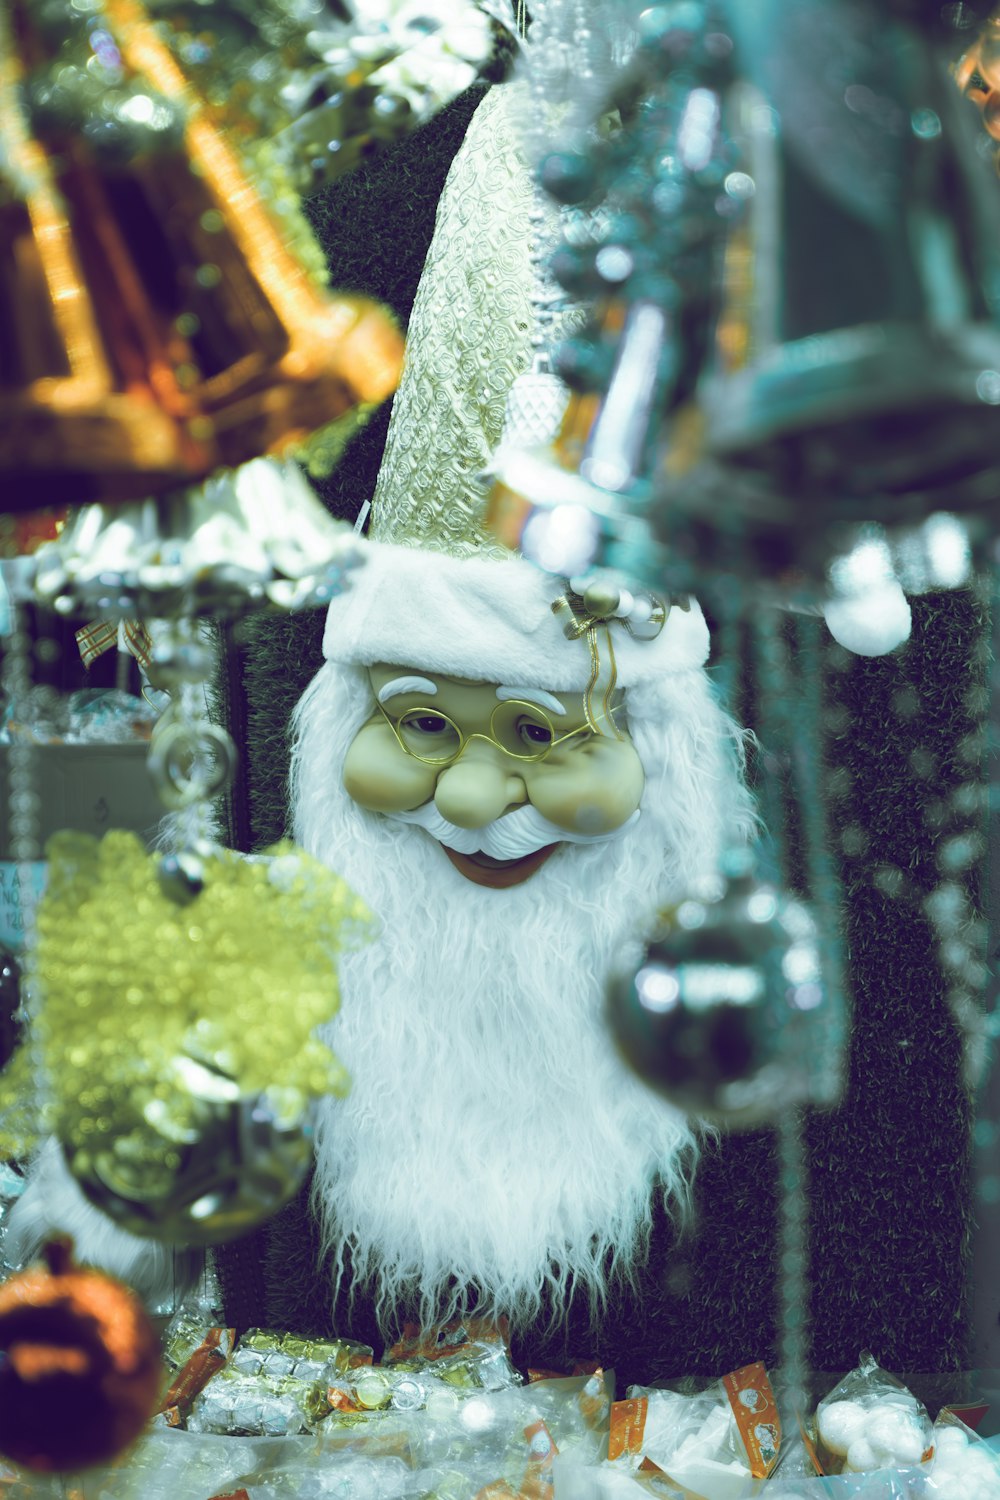 a close up of a santa clause ornament